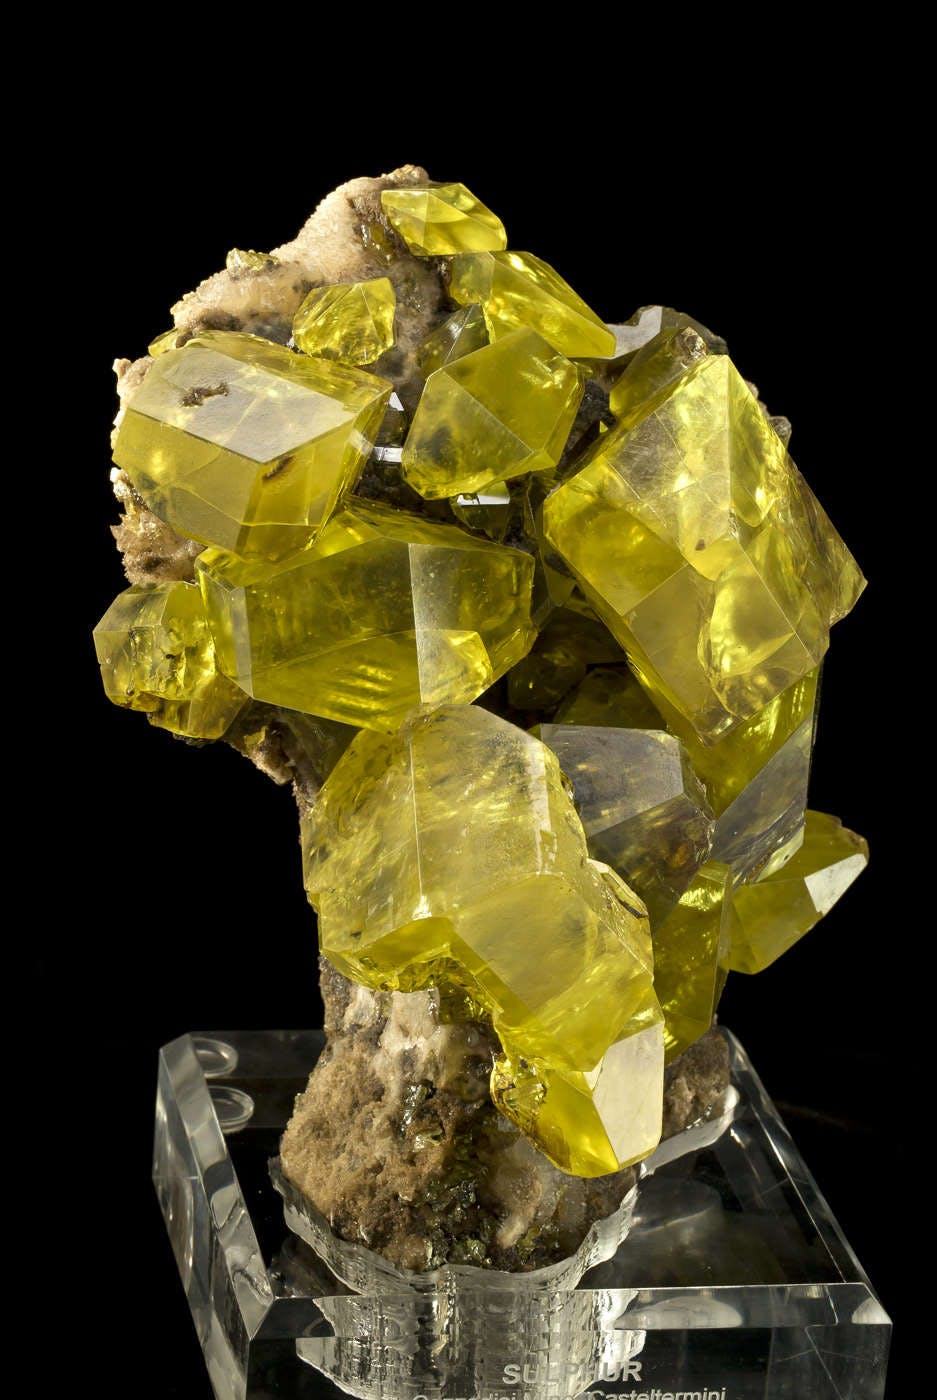 Sulfur with hydrocarbon inclusions - Cozzodisi Mine, Sicily